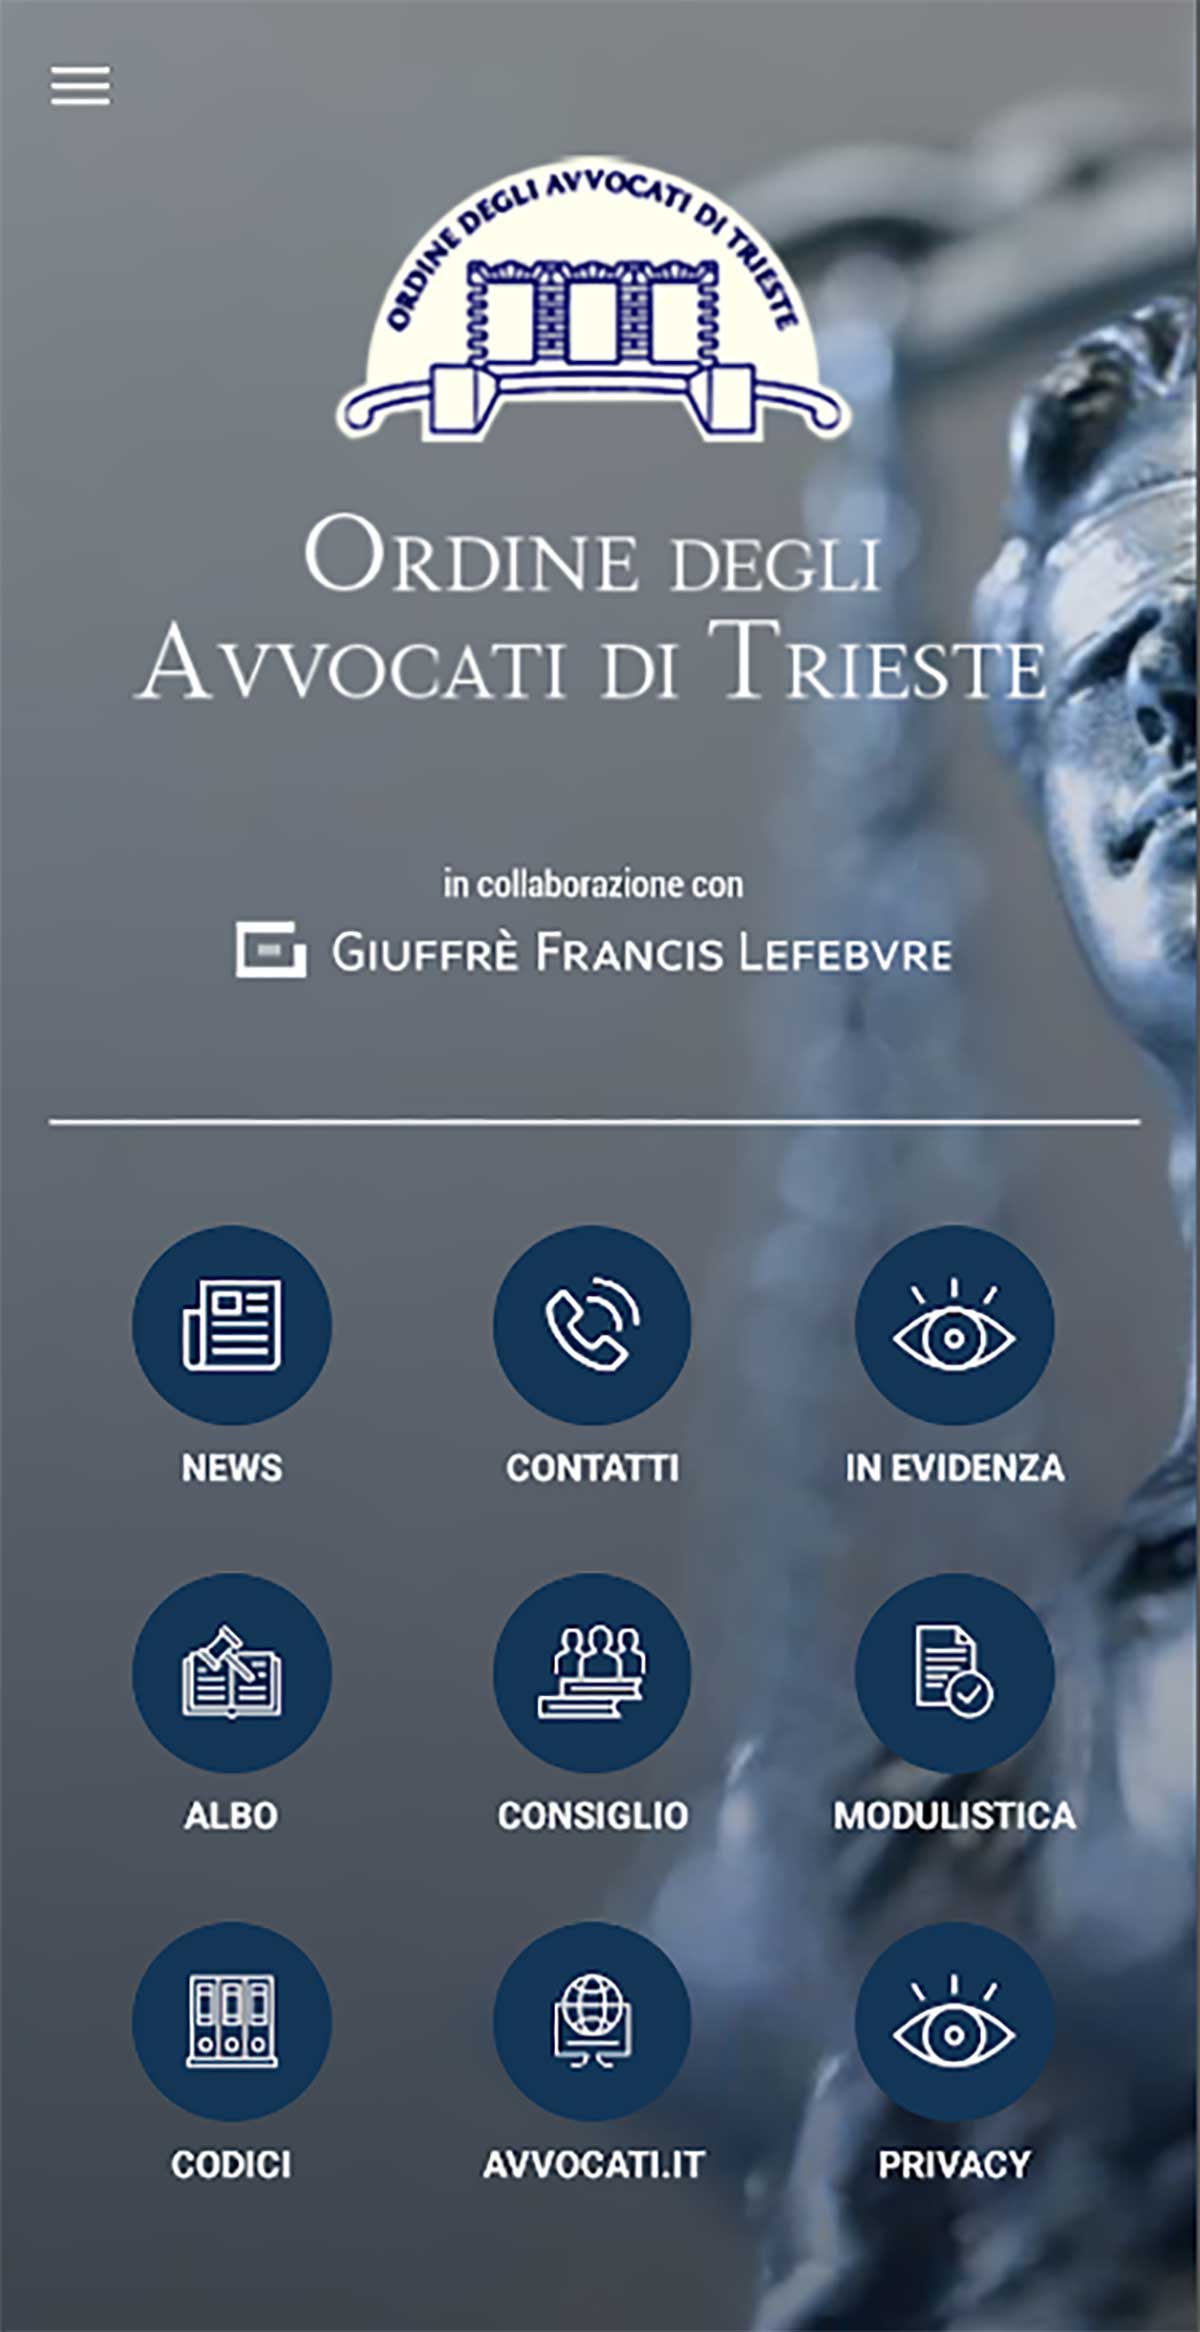 The Trieste Bar Association app is available